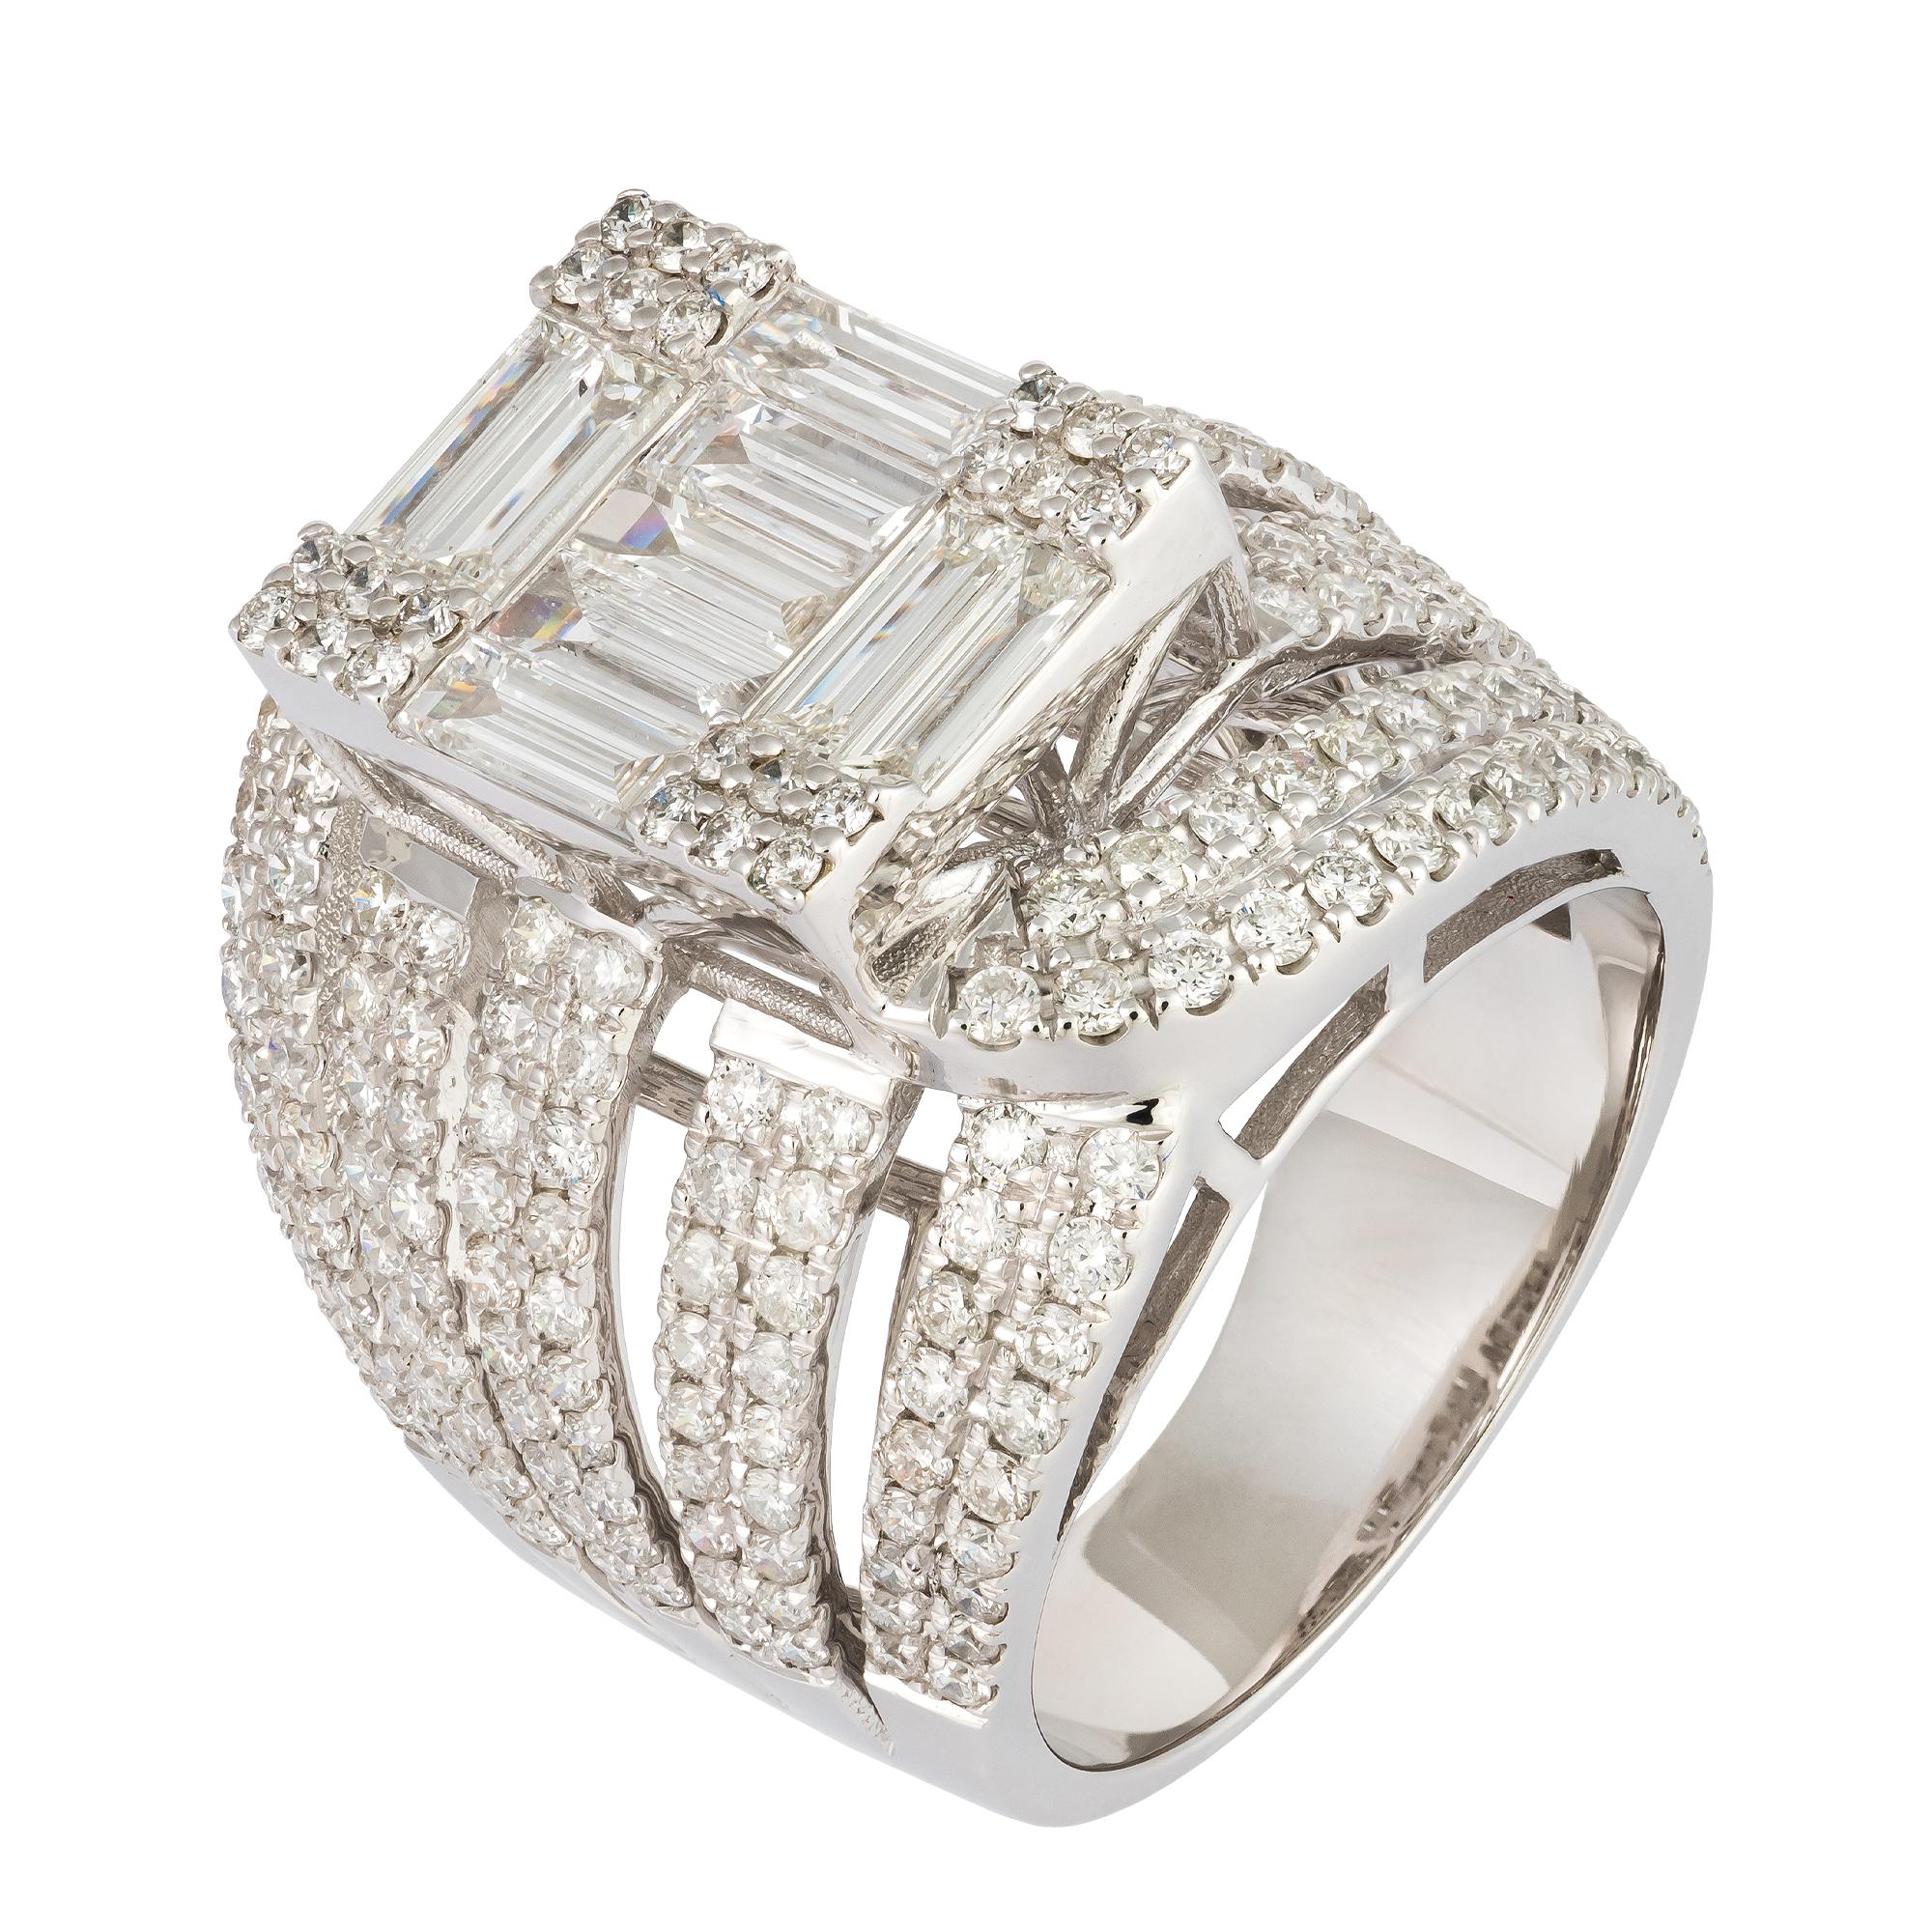 For Sale:  Unique White 18K Gold White Diamond Ring For Her 3